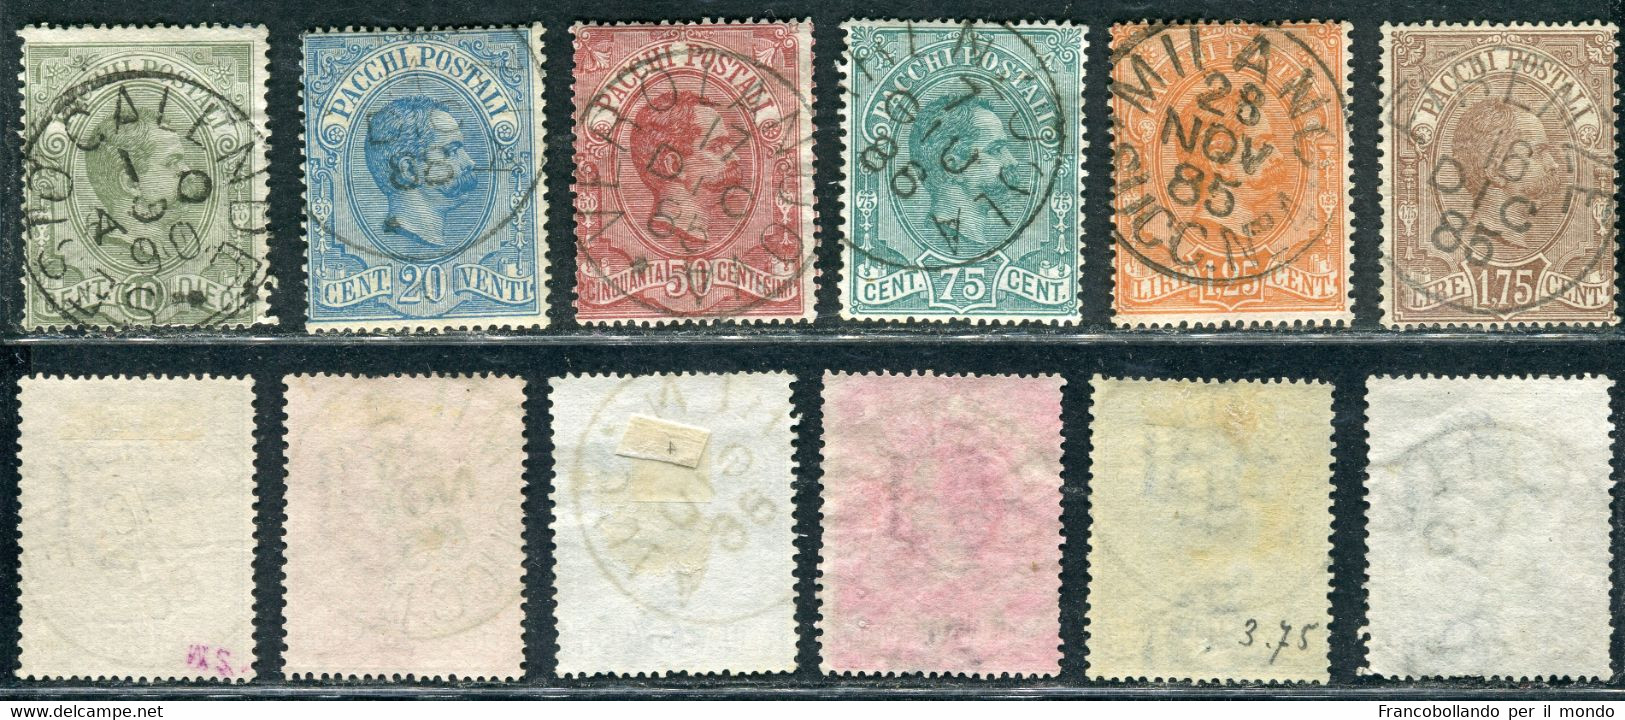 1884/86 Regno D'Italia Pacchi Postali Serie Completa N° S 2100 Usata - Colis-postaux